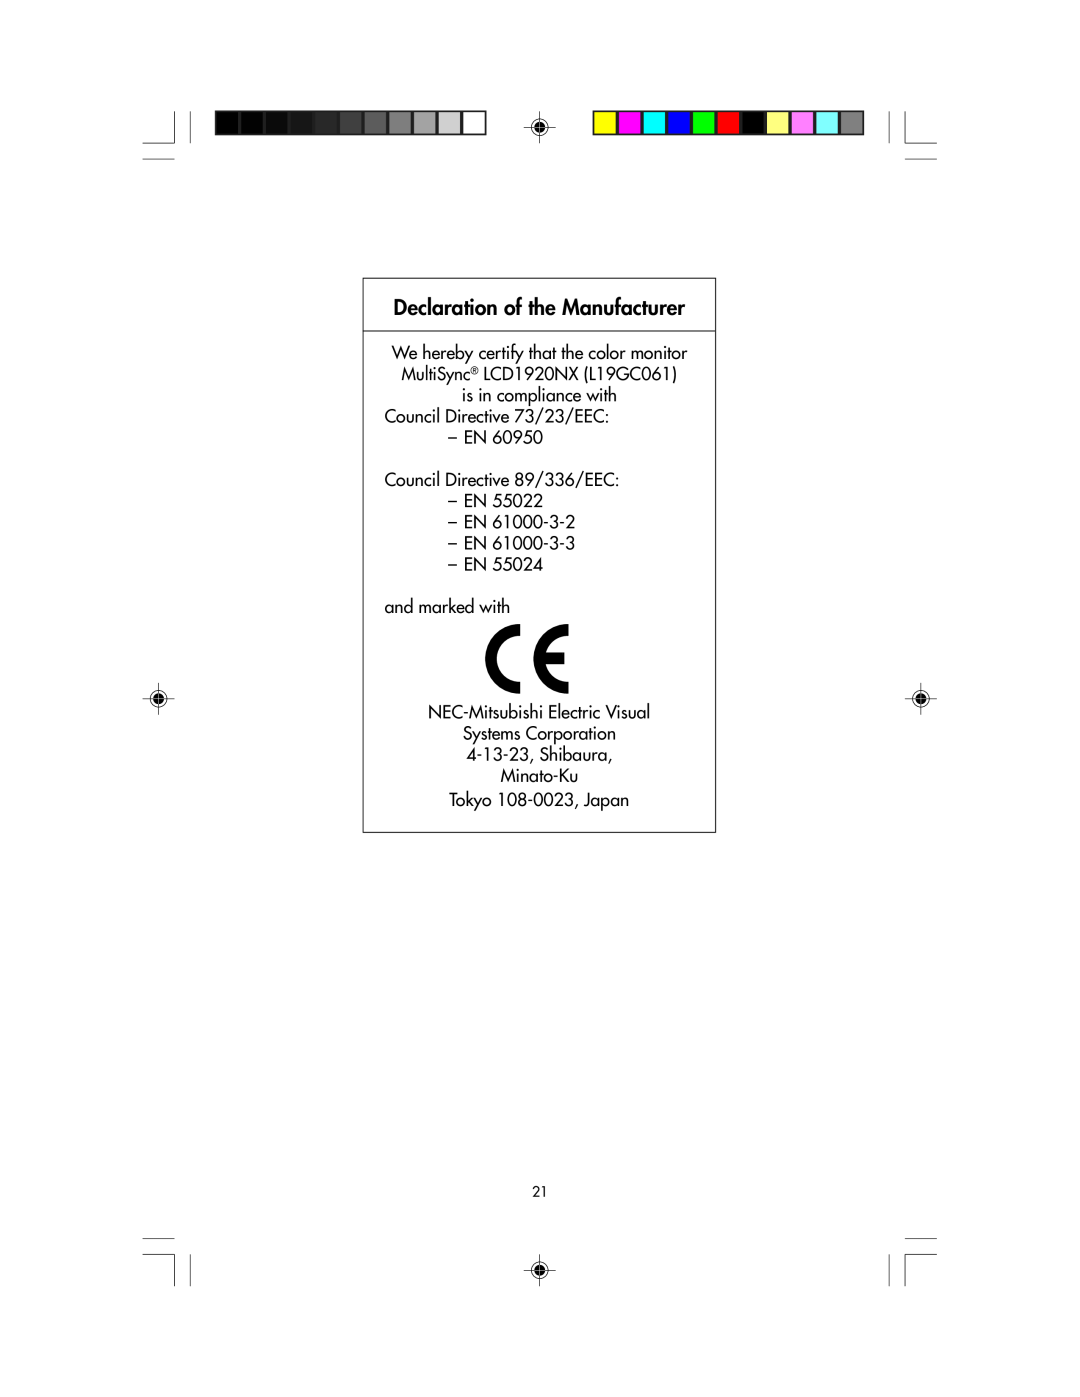 NEC LCD1920NX manual Declaration of the Manufacturer, Council Directive 73/23/EEC EN Council Directive 89/336/EEC EN EN EN 